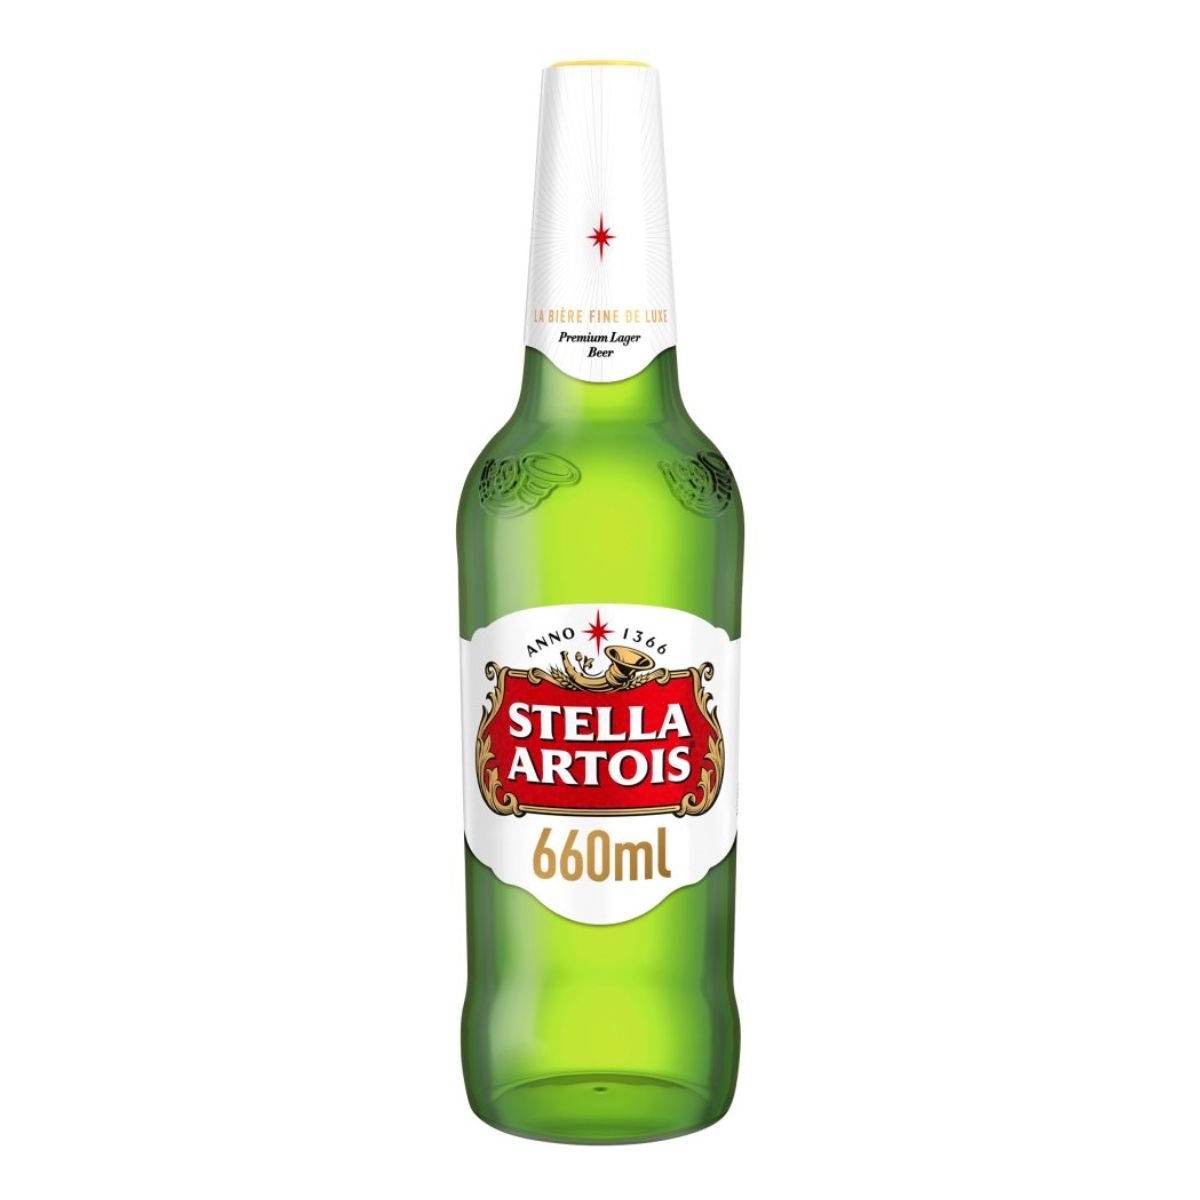 A bottle of Stella Artois - Belgium Premium Lager Beer (4.6% ABV) - 660ml on a white background.